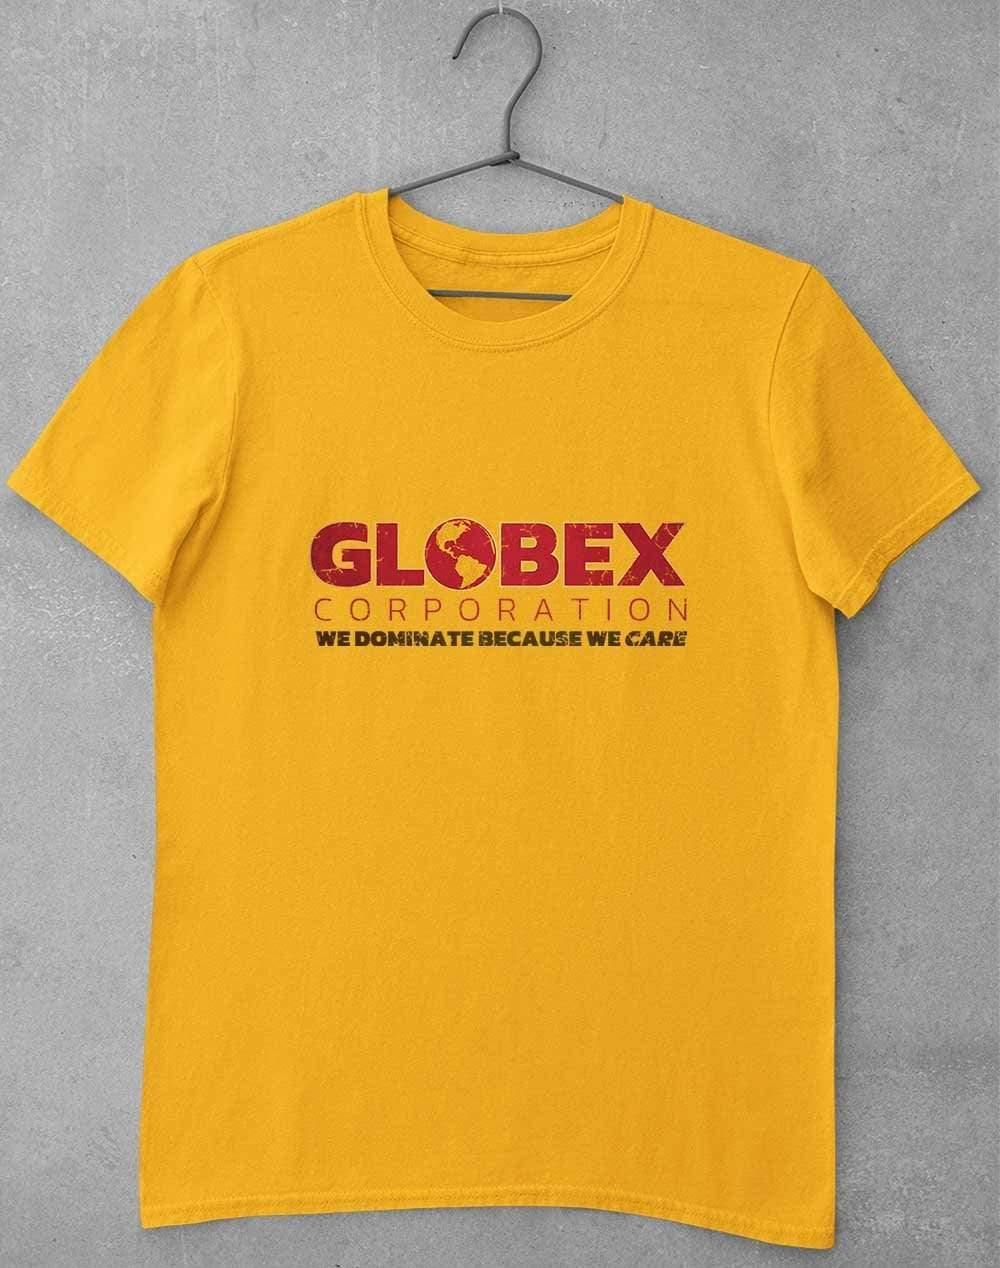 Globex Corporation T-Shirt S / Gold  - Off World Tees